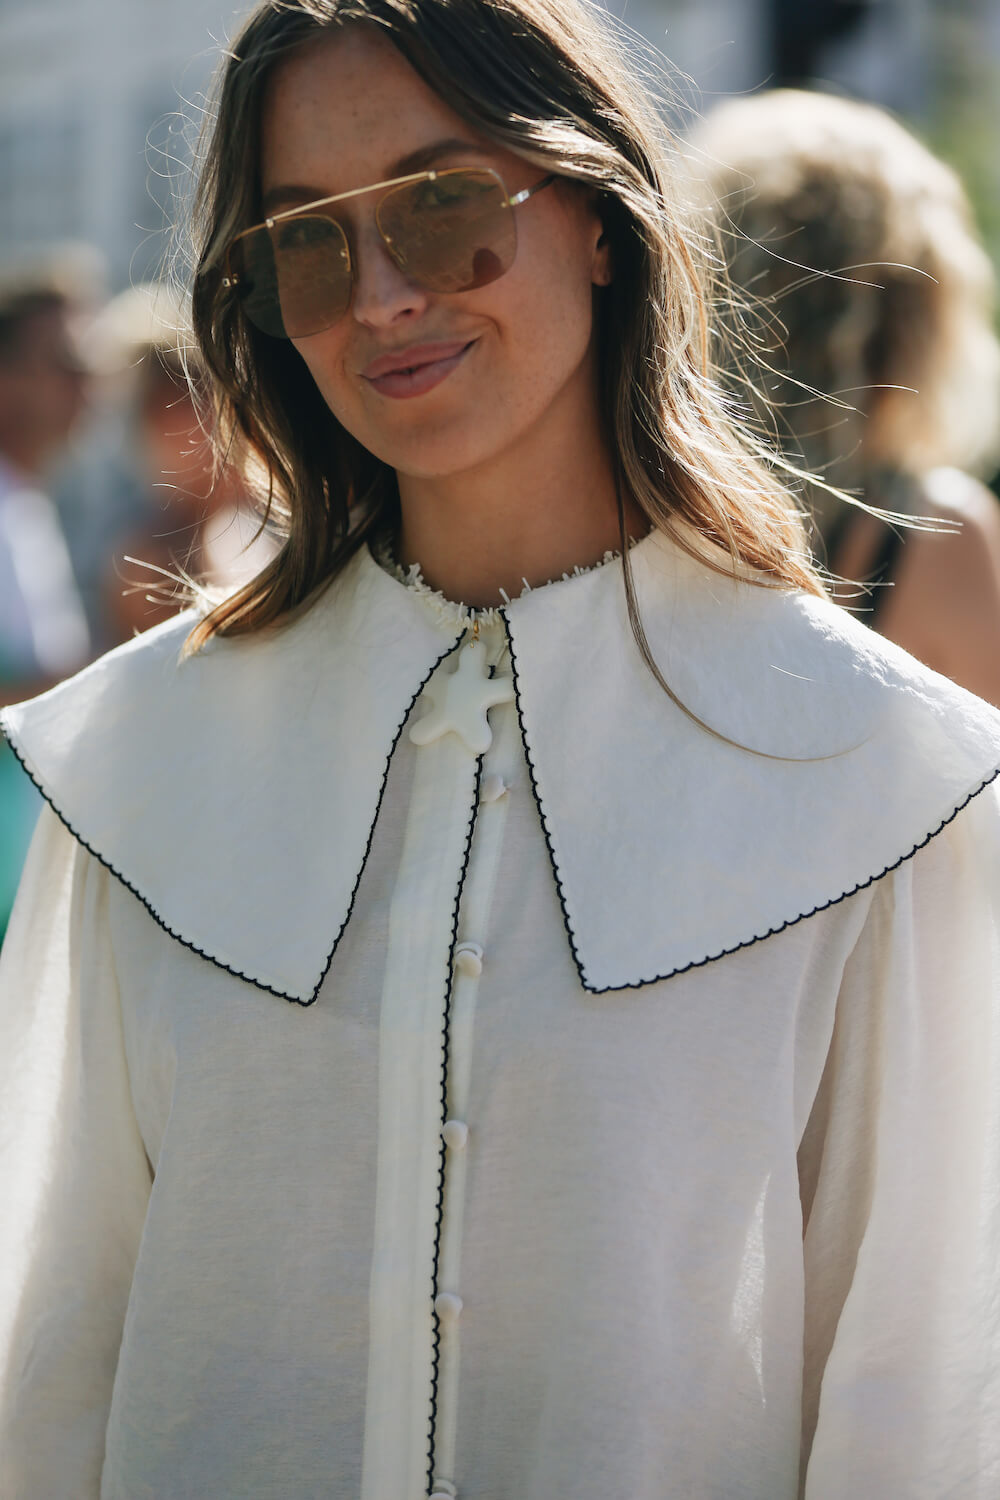 woman at copenhagen fashion week wearing white shirt and sunglasses